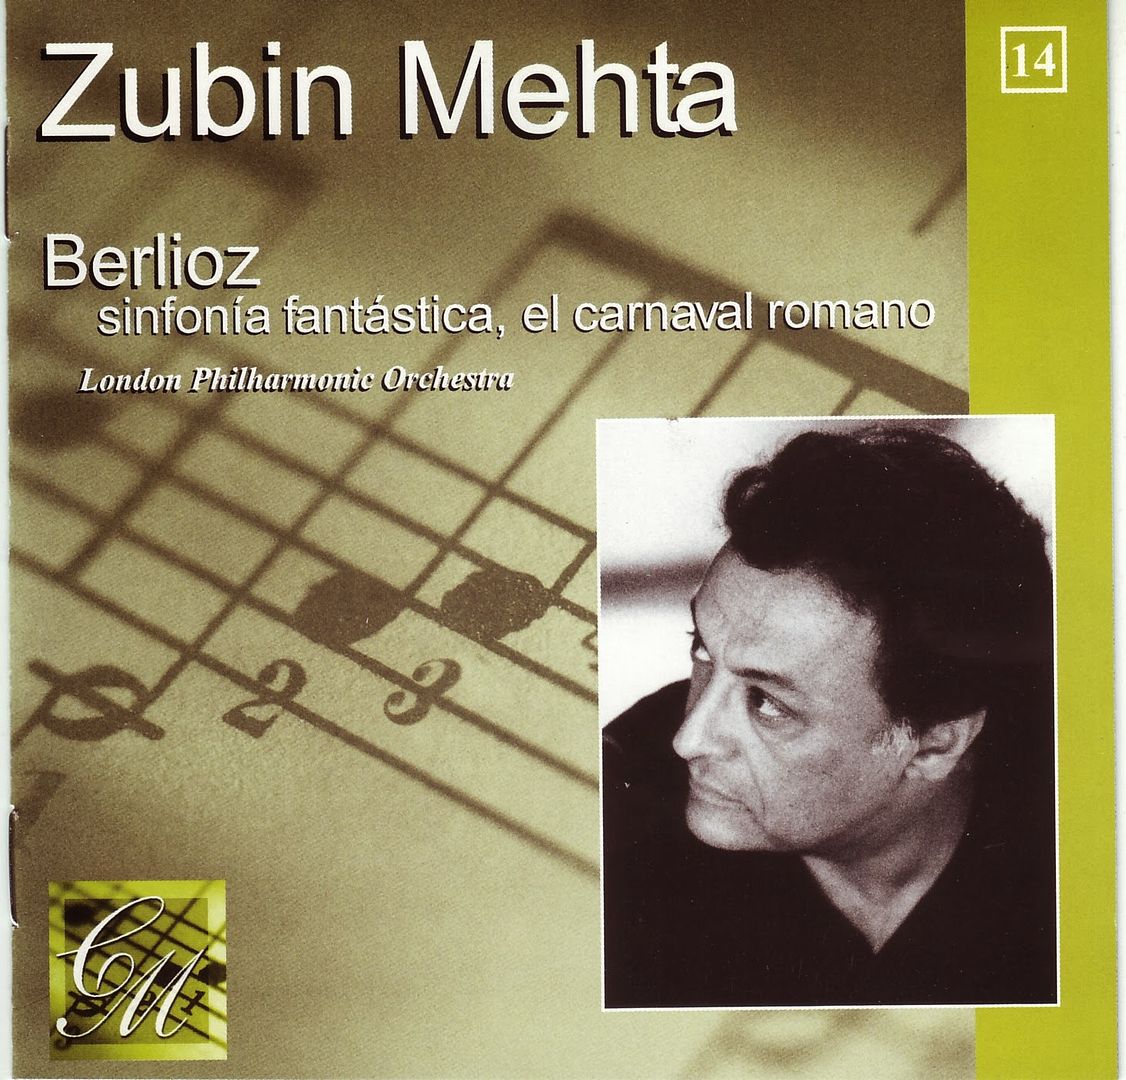 1 2247 - Zubin Mehta - Berlioz Sinfonia fantastica Op.14. El carnaval romanos